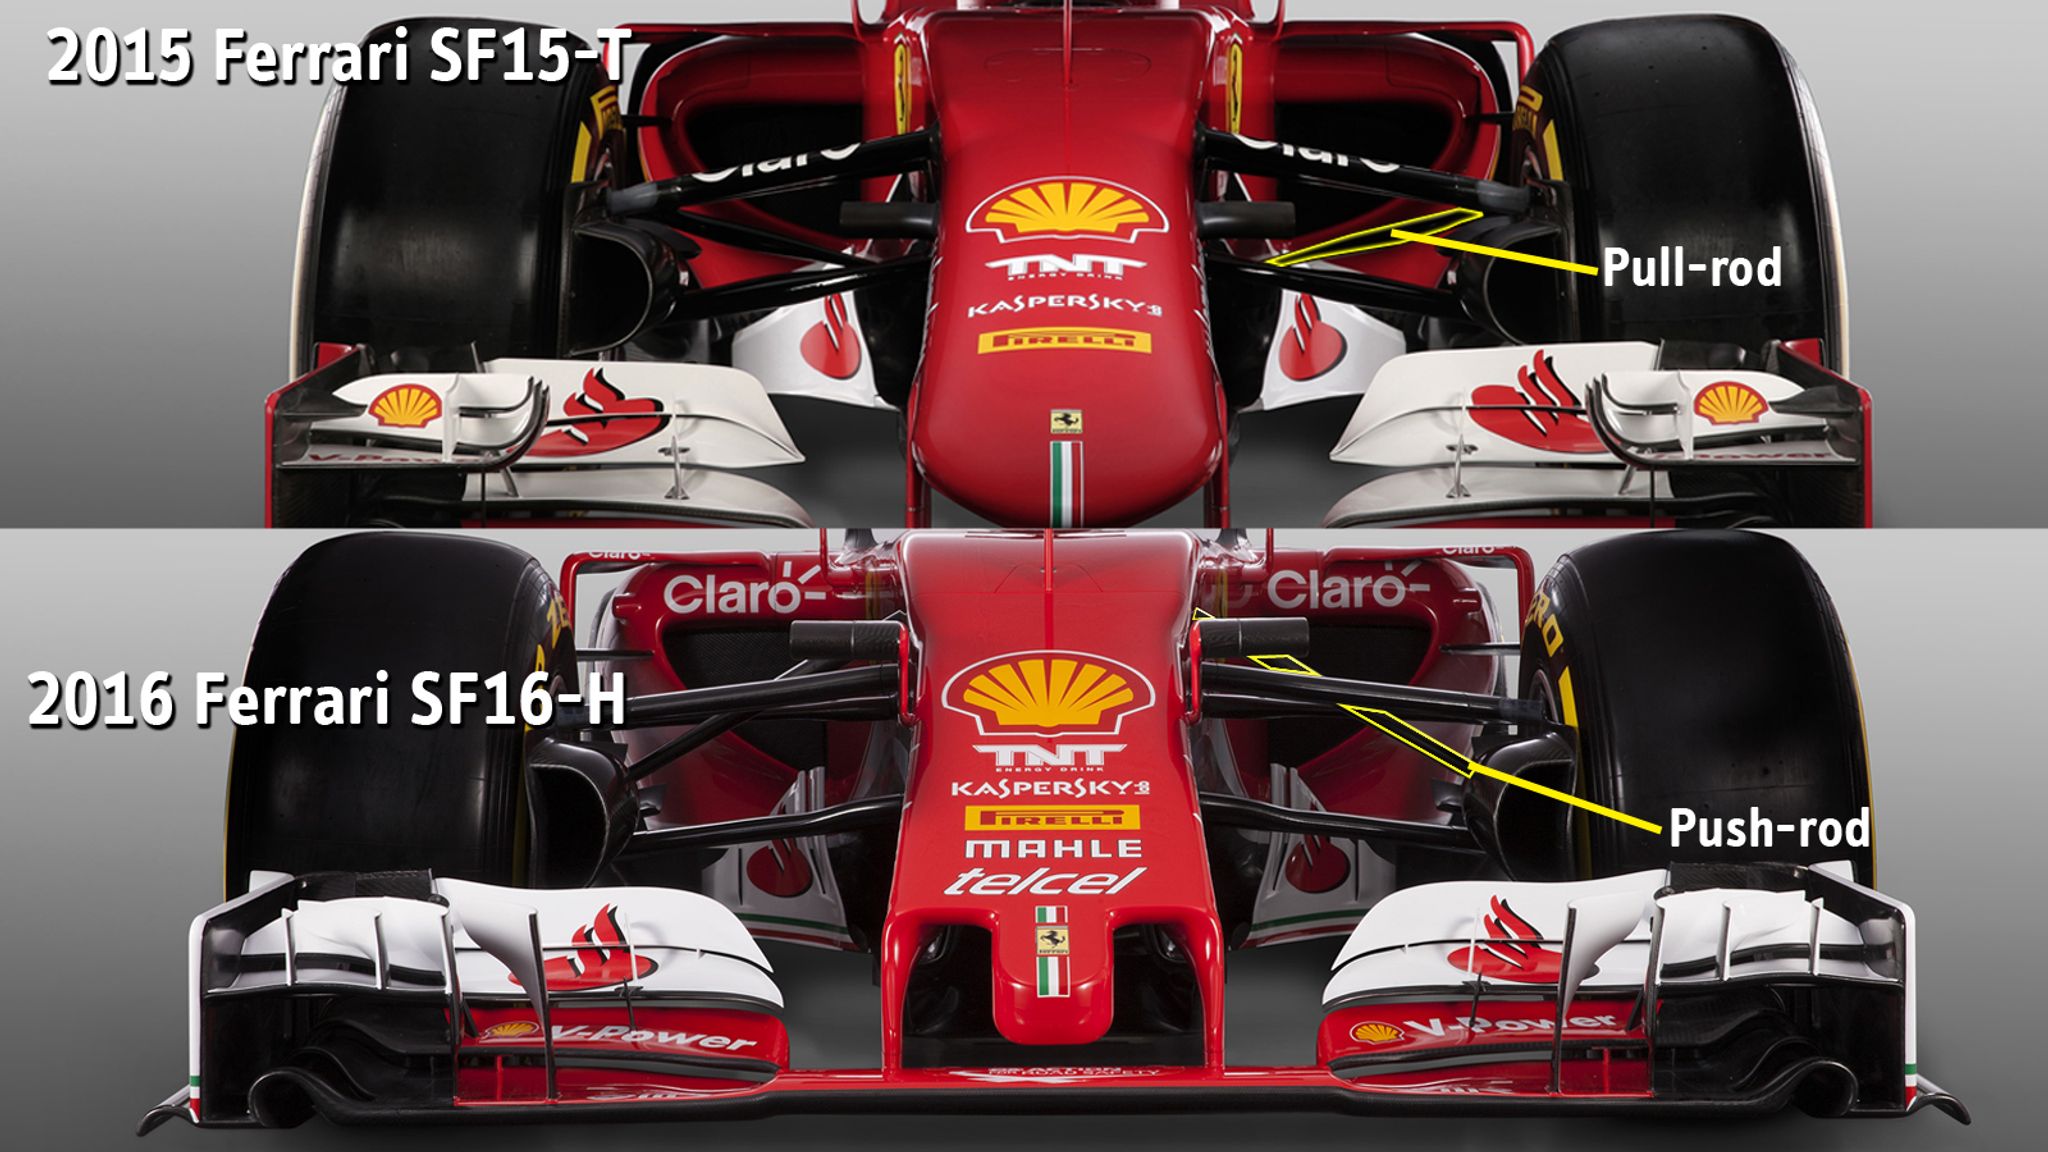 Ferrari switch to push-rod suspension for F1 2016 season, F1 News